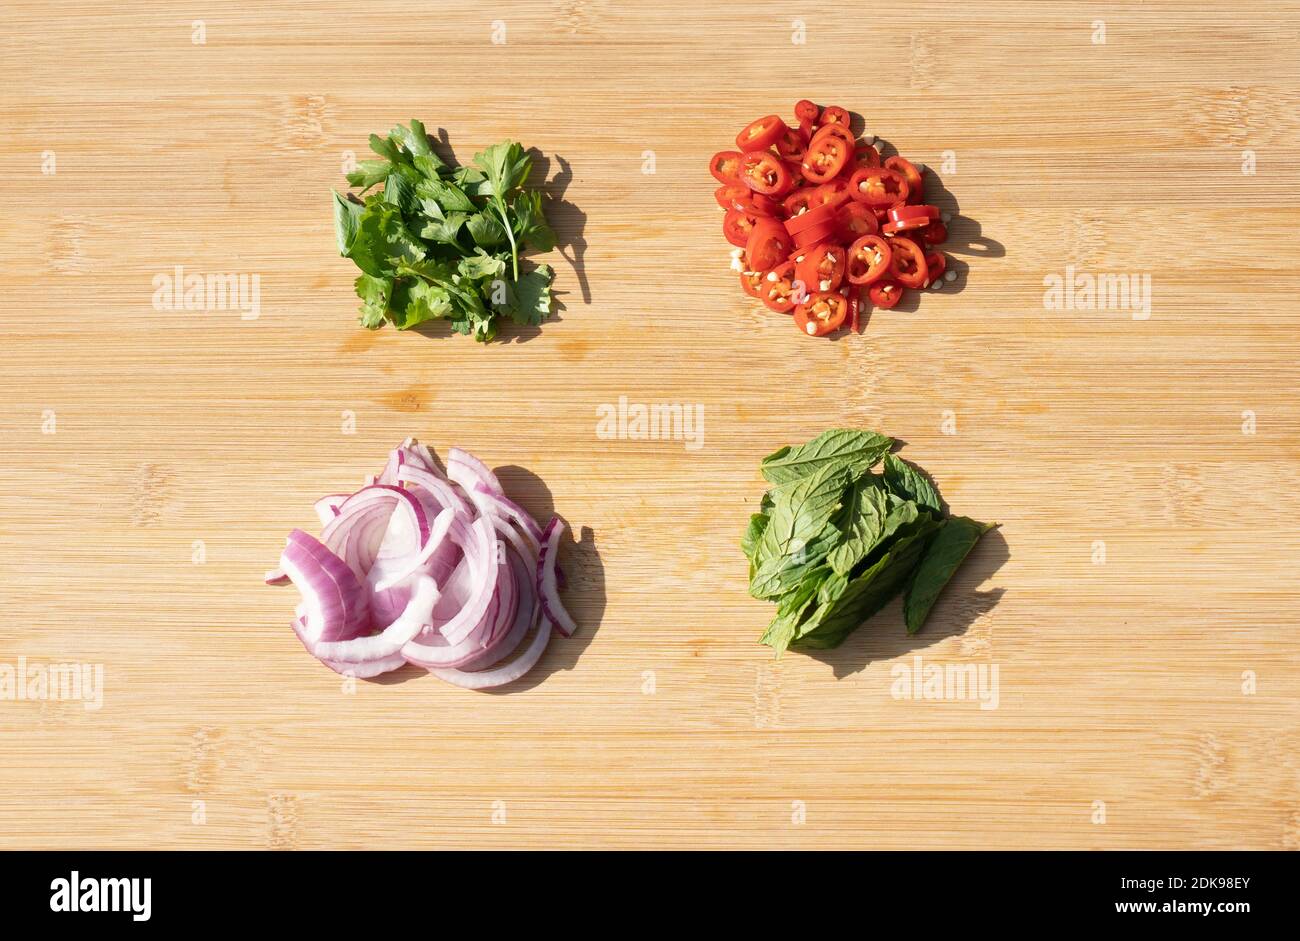 Sliced vegetables for making an Asian bun sandwich Stock Photo